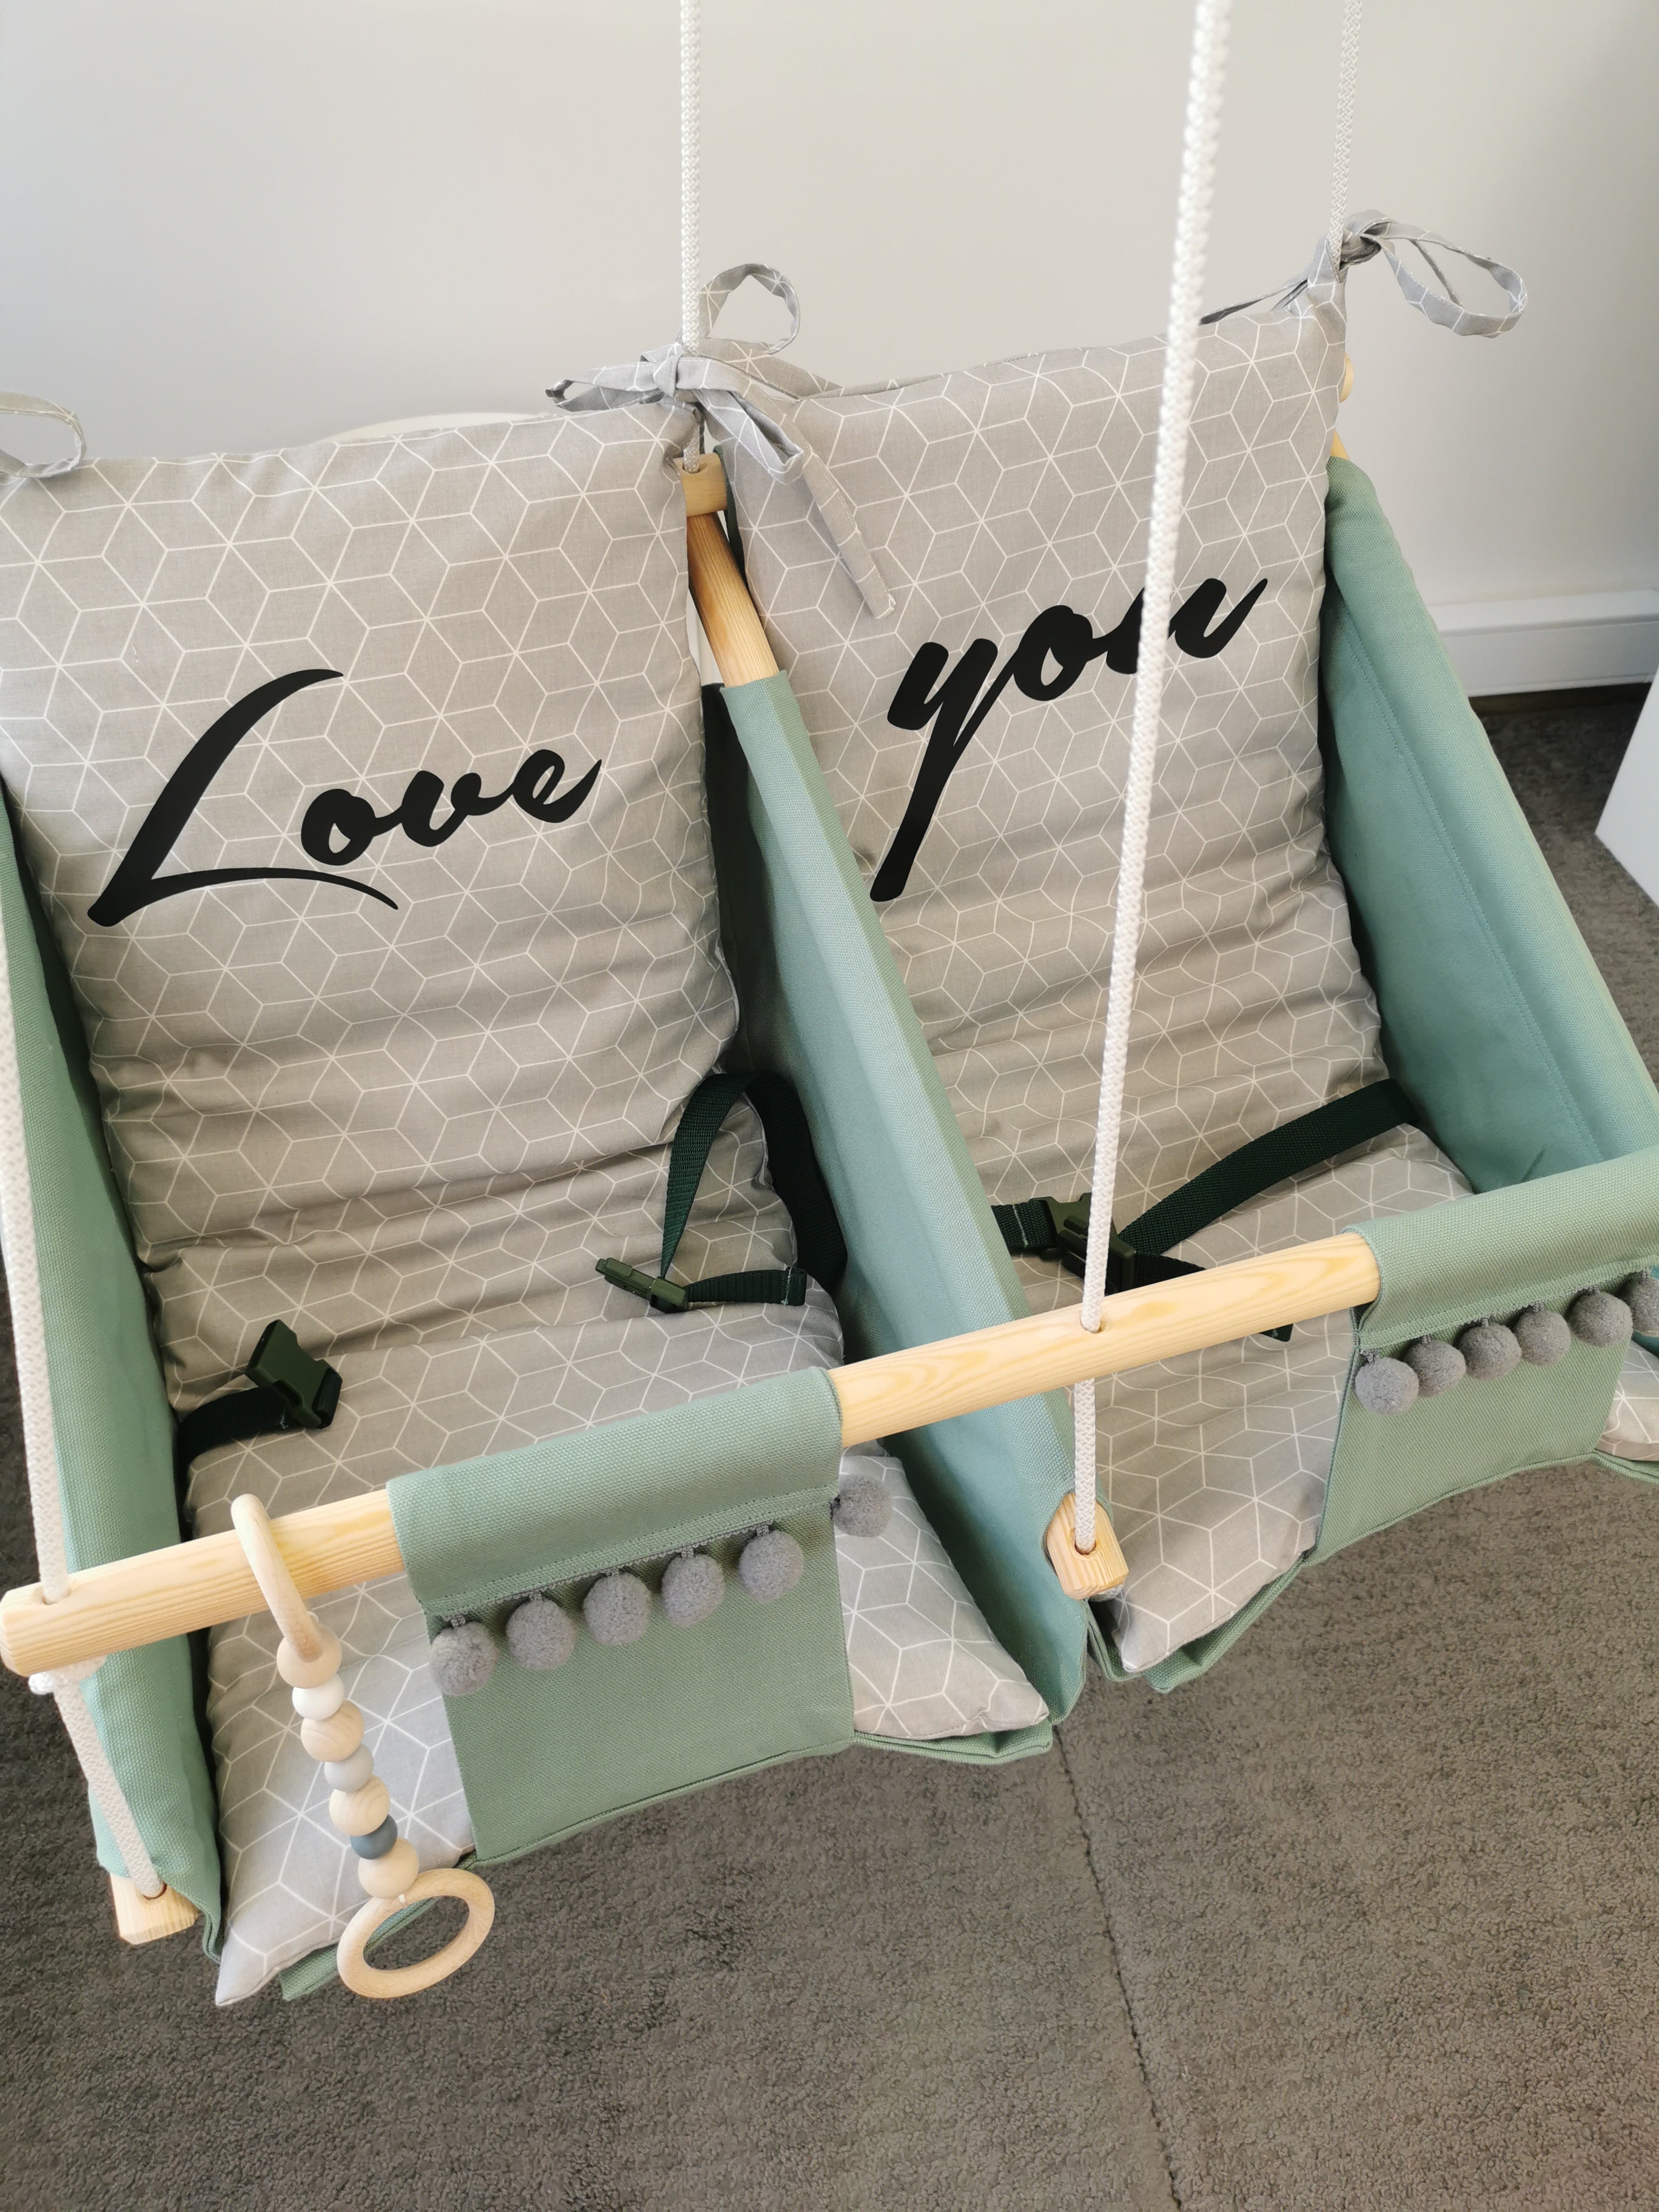 Twin hammock swing "Love you"